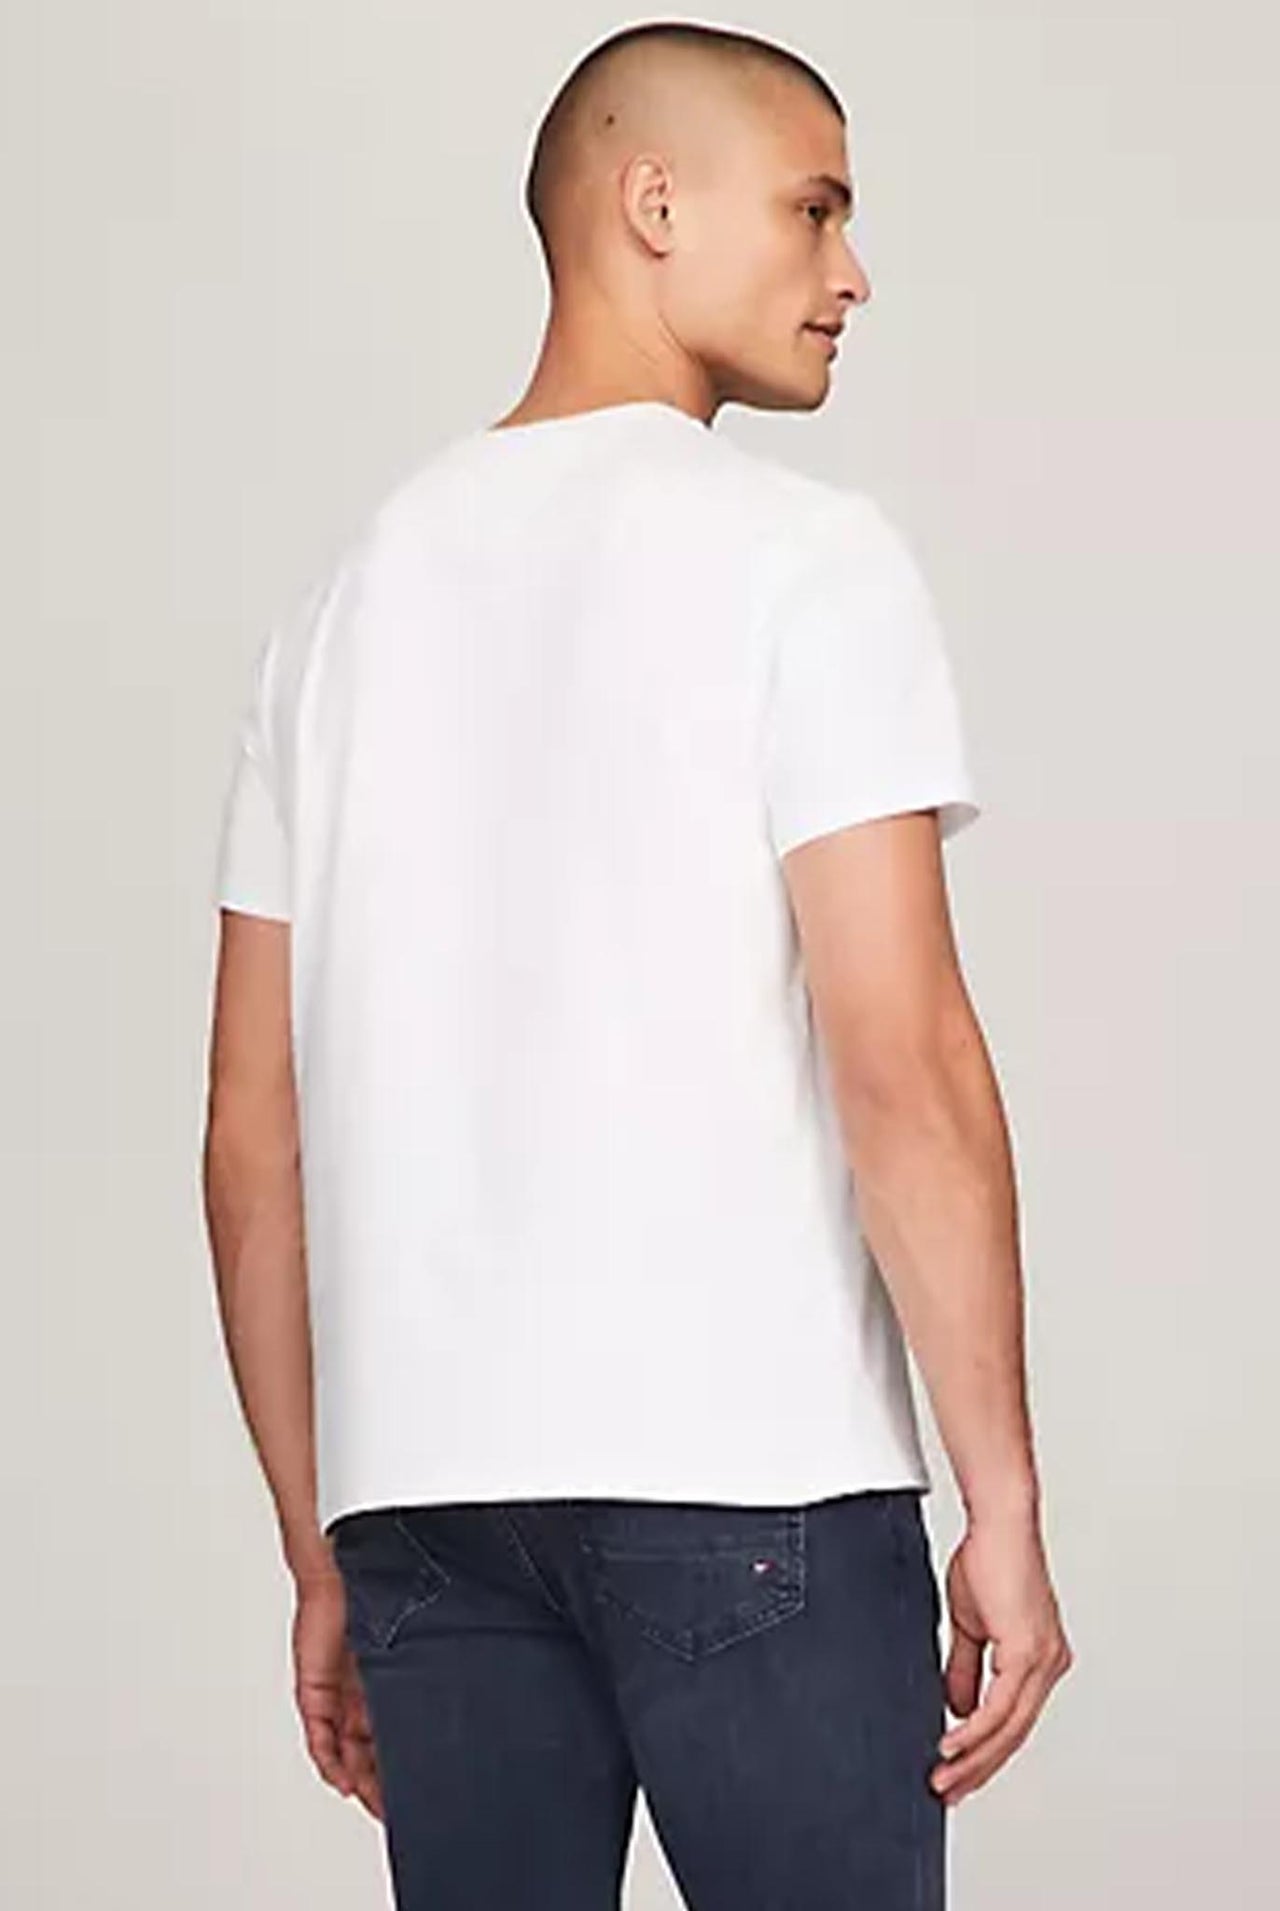 Camiseta Tommy Hilfiguer Graphic Optic White